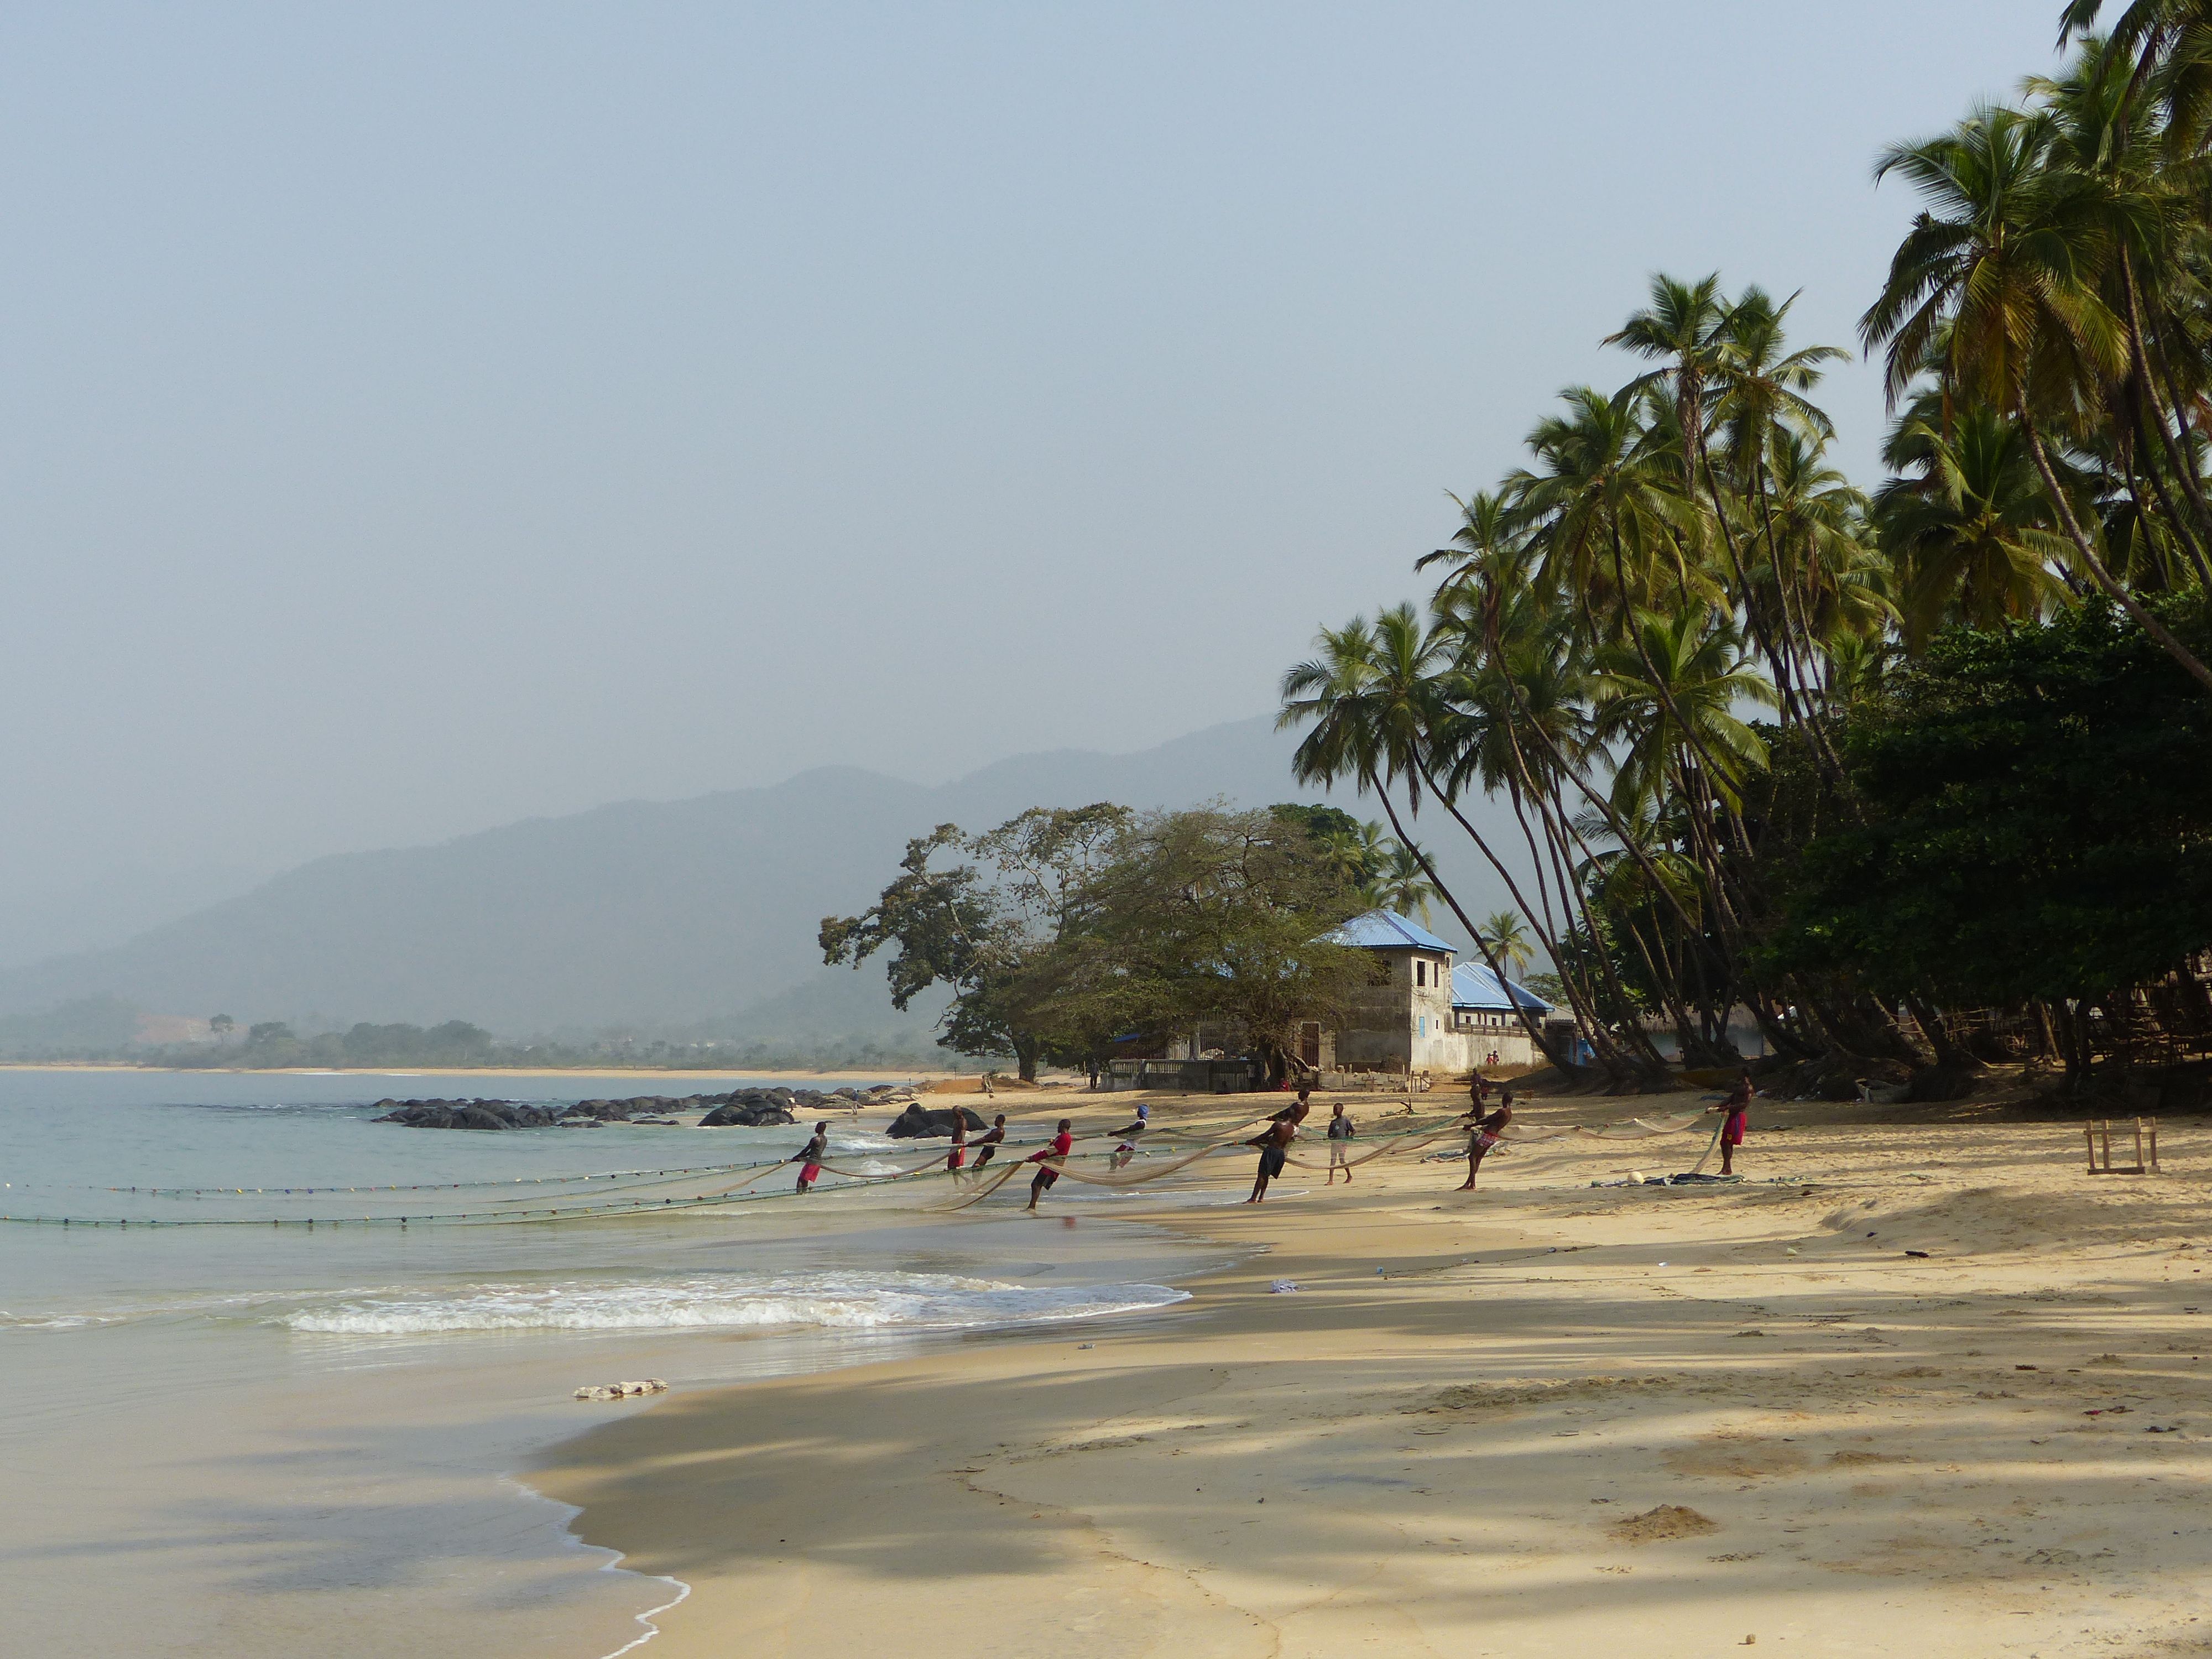 Bureh beach, Sierra Leone